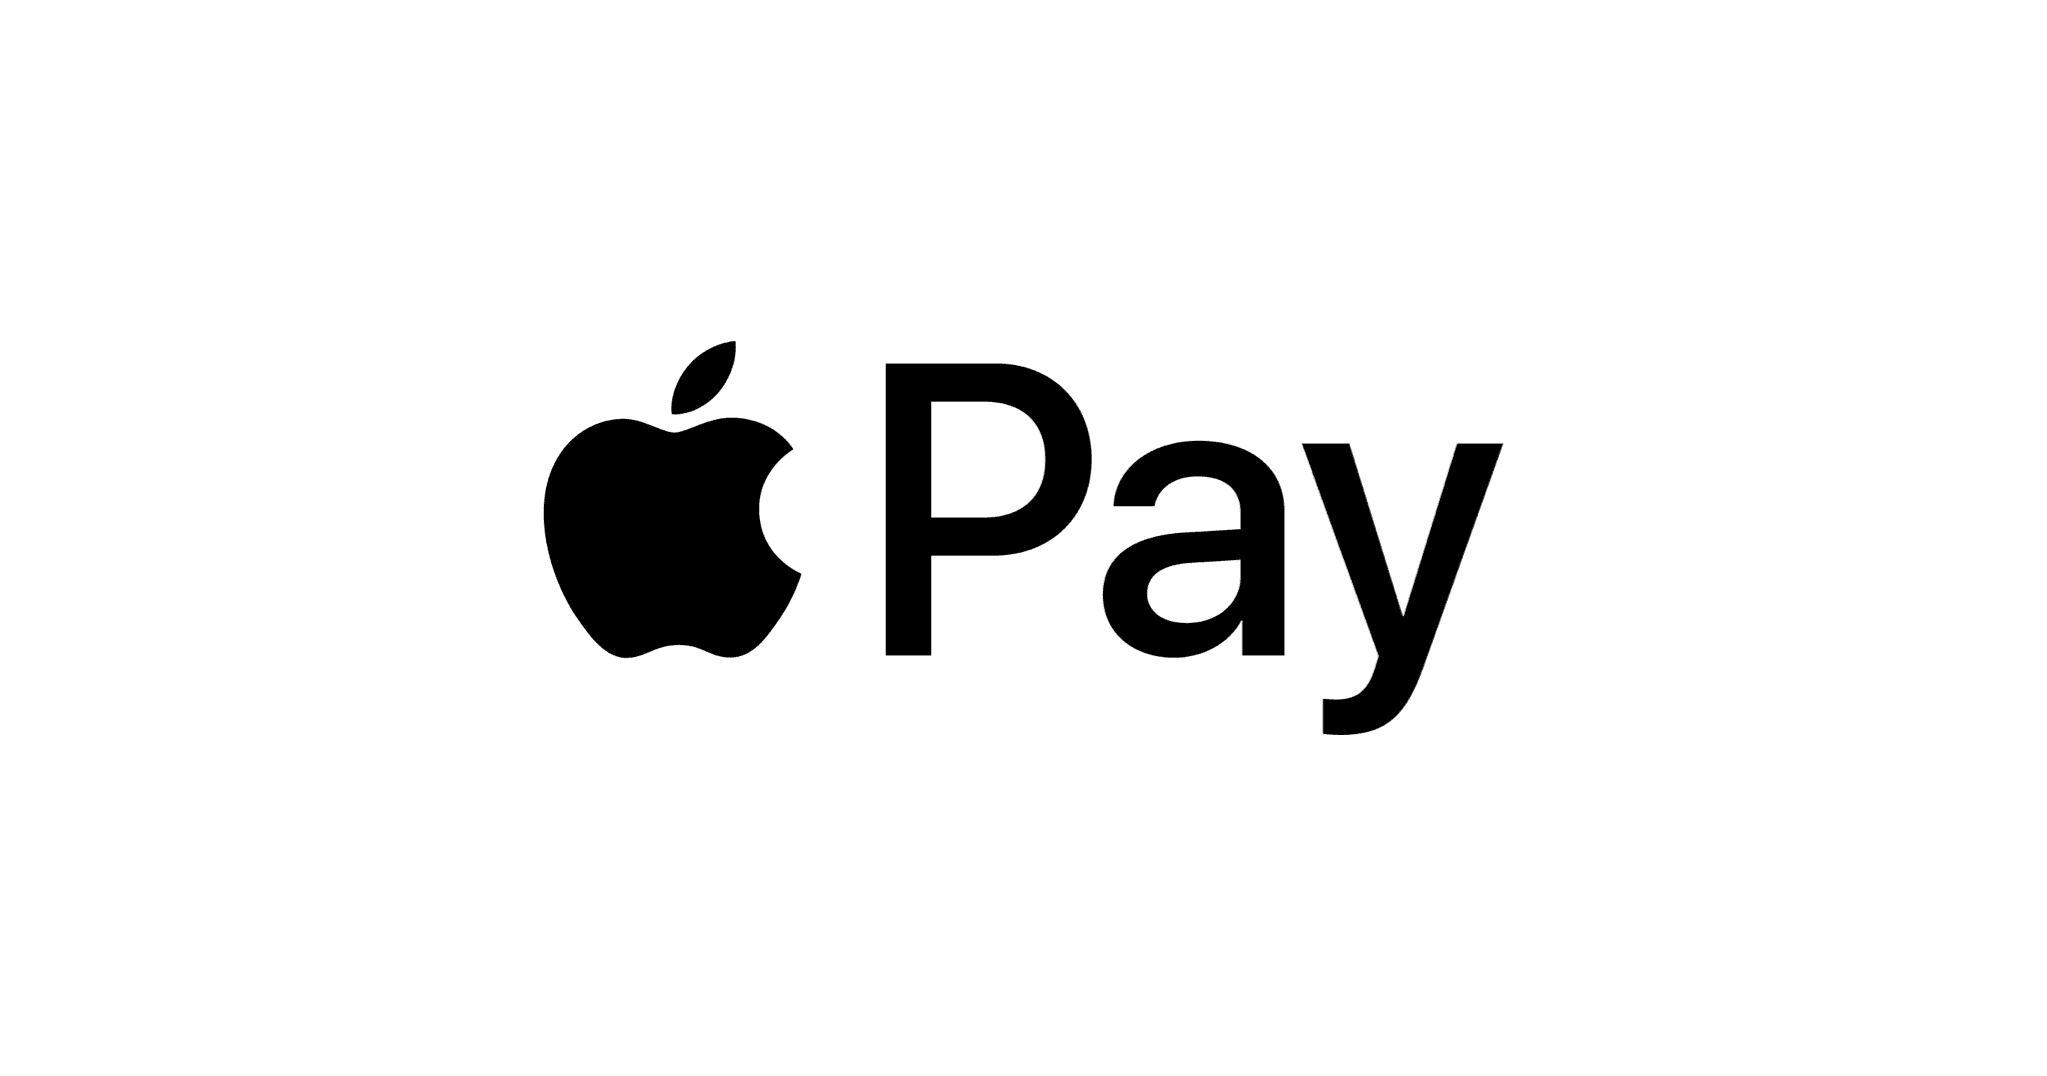 Apple Pay is now a deposit option on Verdict Tournaments